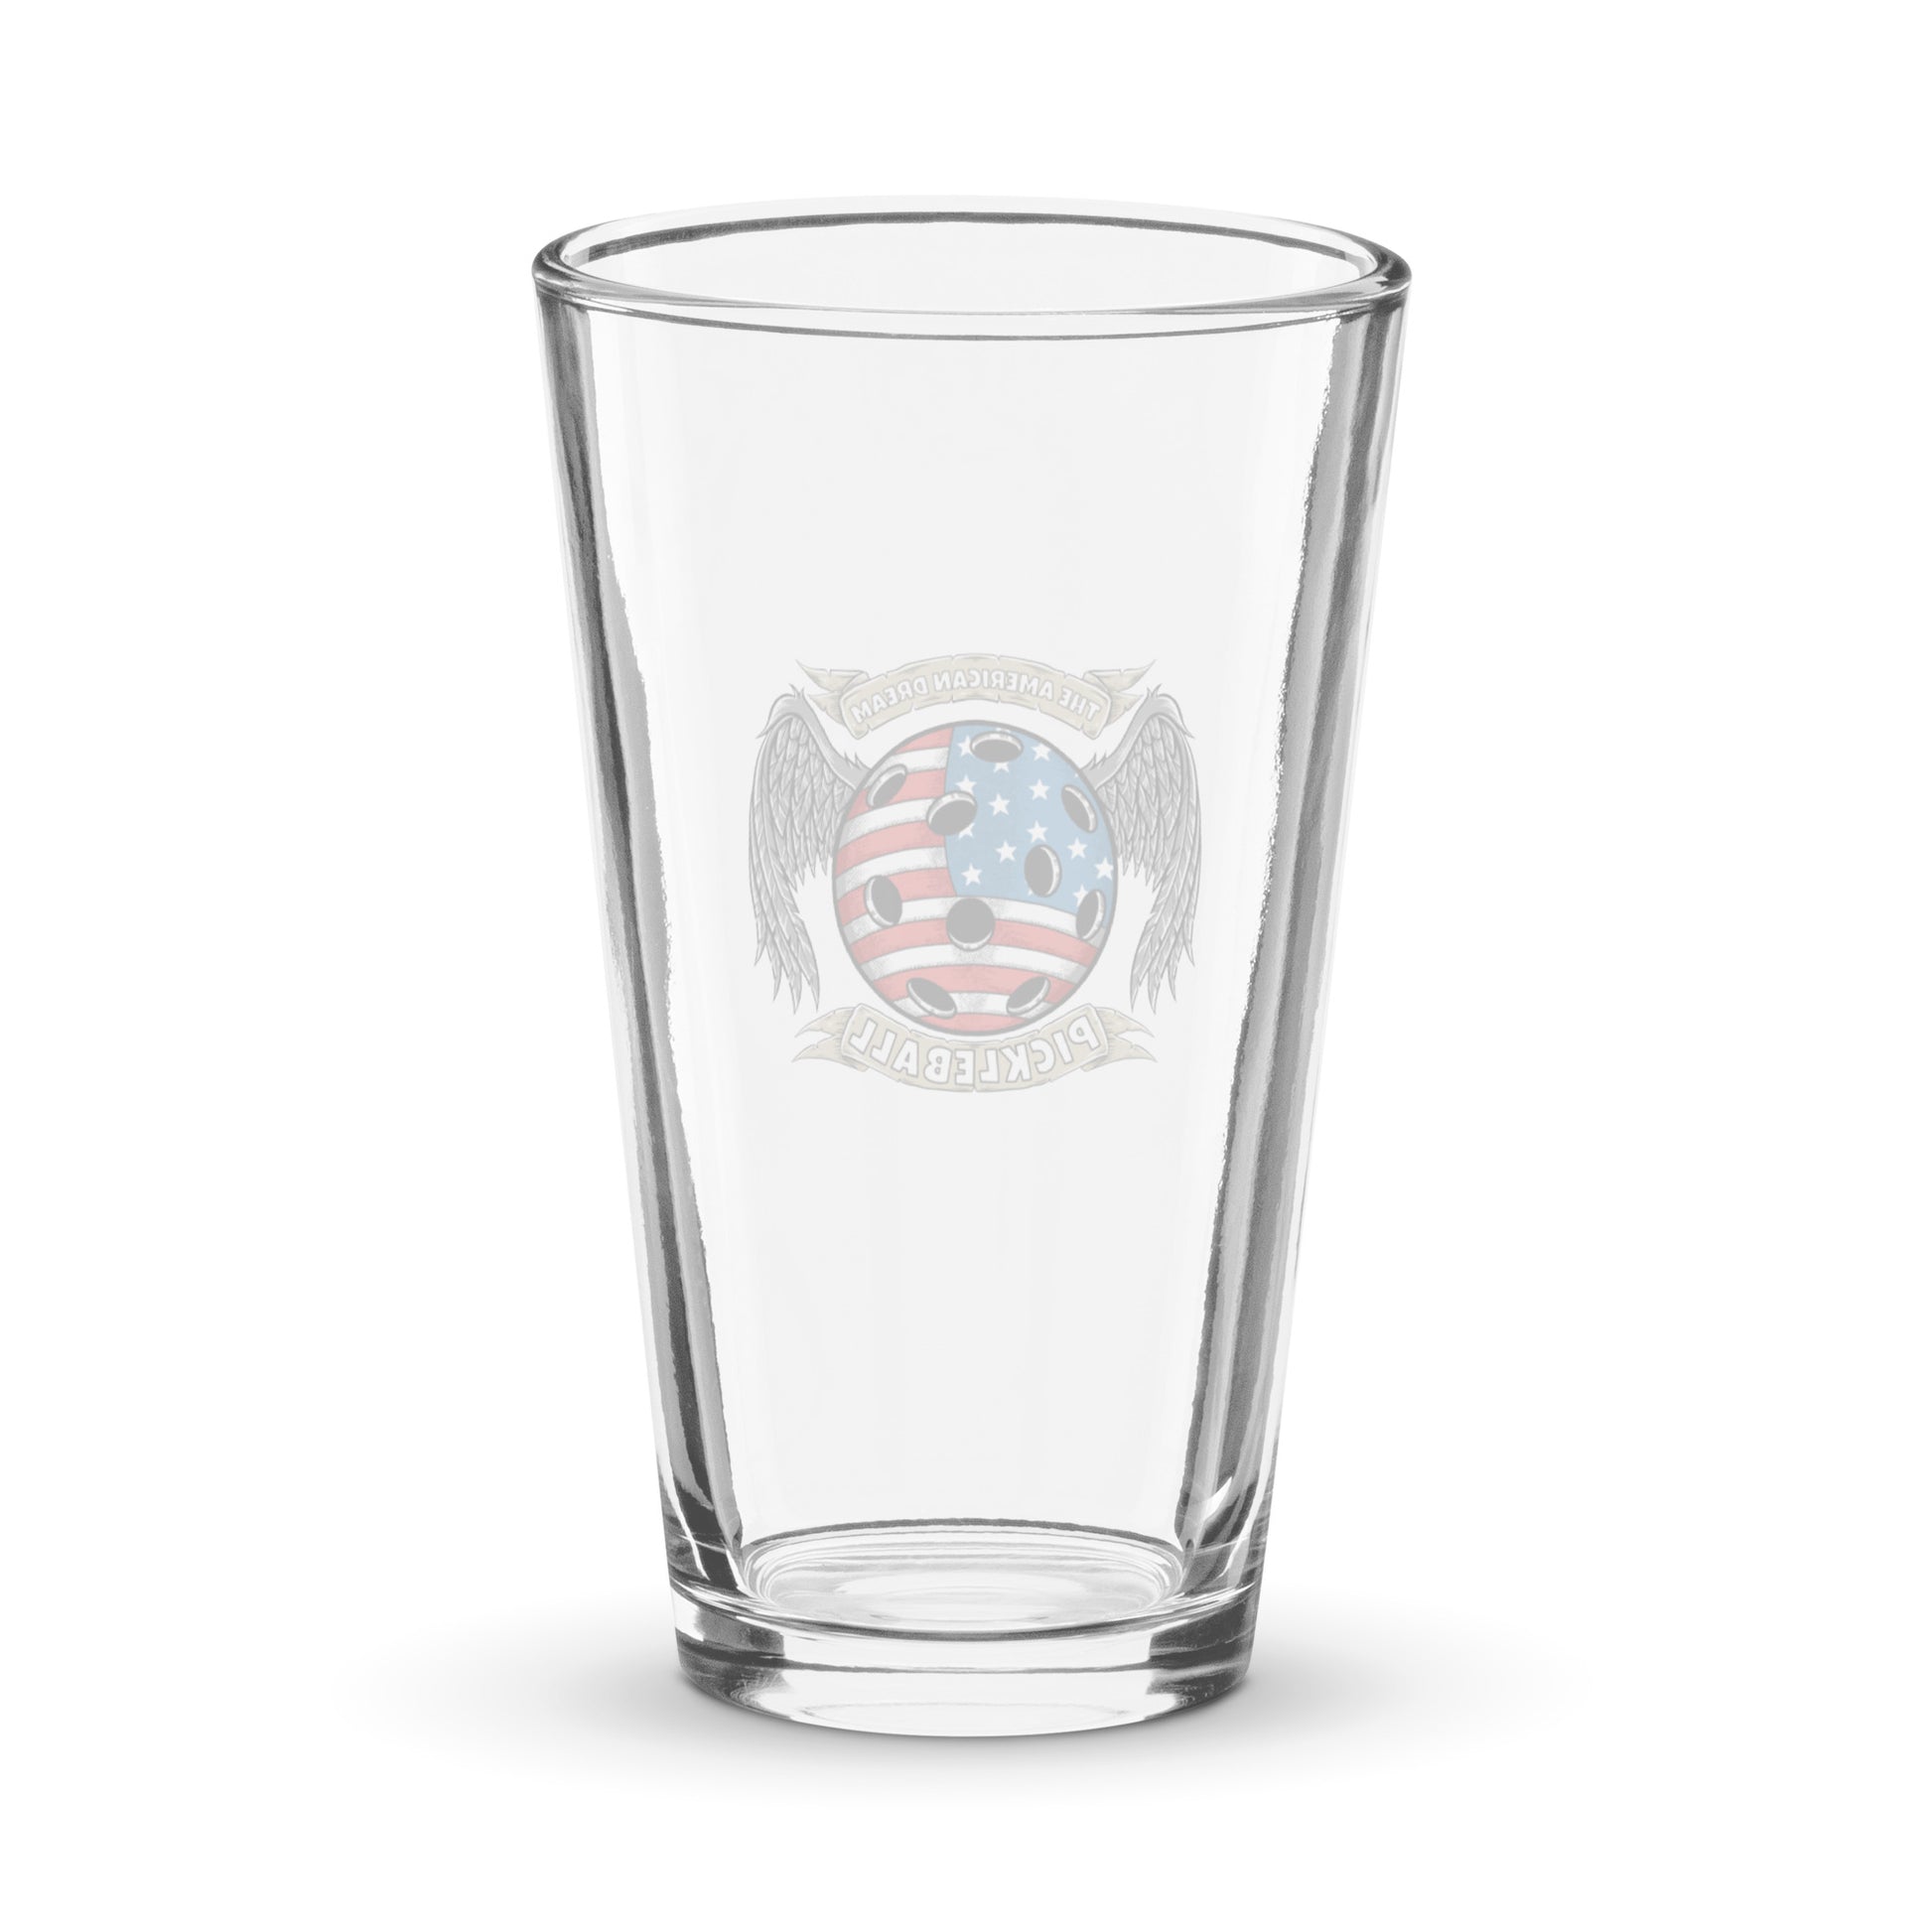 The back of The American Dream: Pickleball Shaker Pint Glass